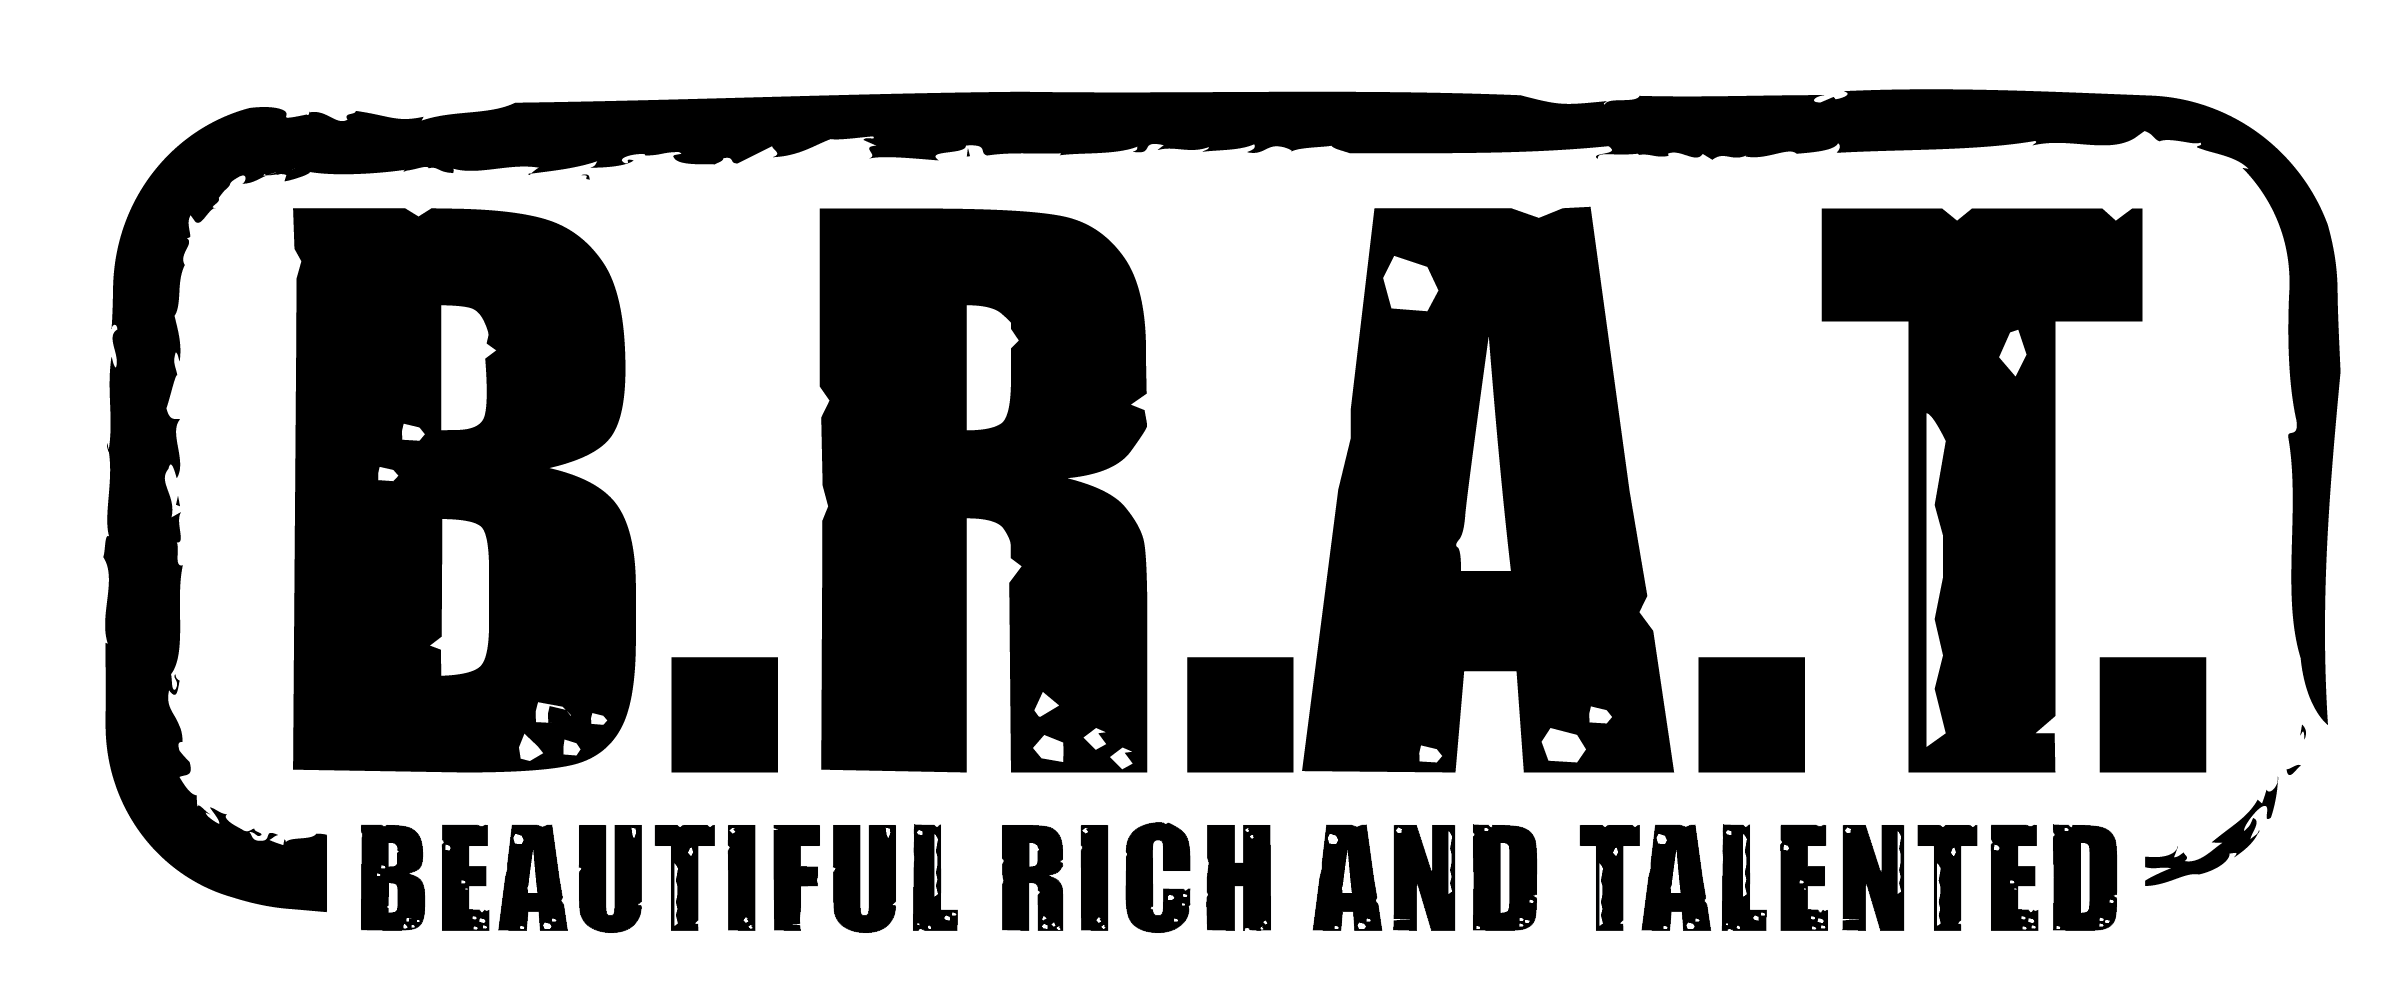 Brat Logo - Hot BRAT Logo | BRAT Incorporated